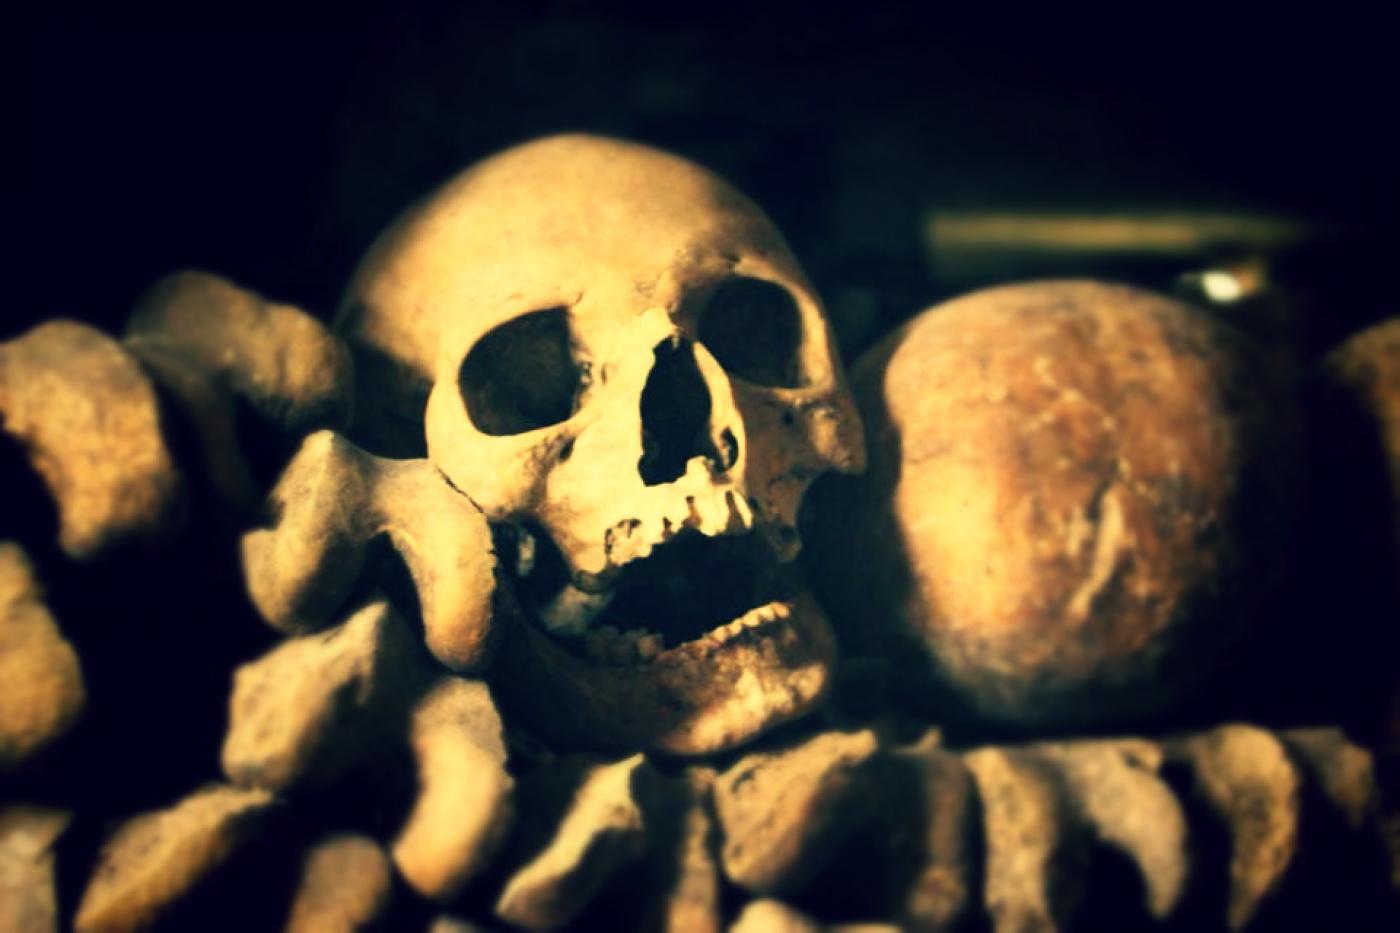 кости в парижских катакомбах 